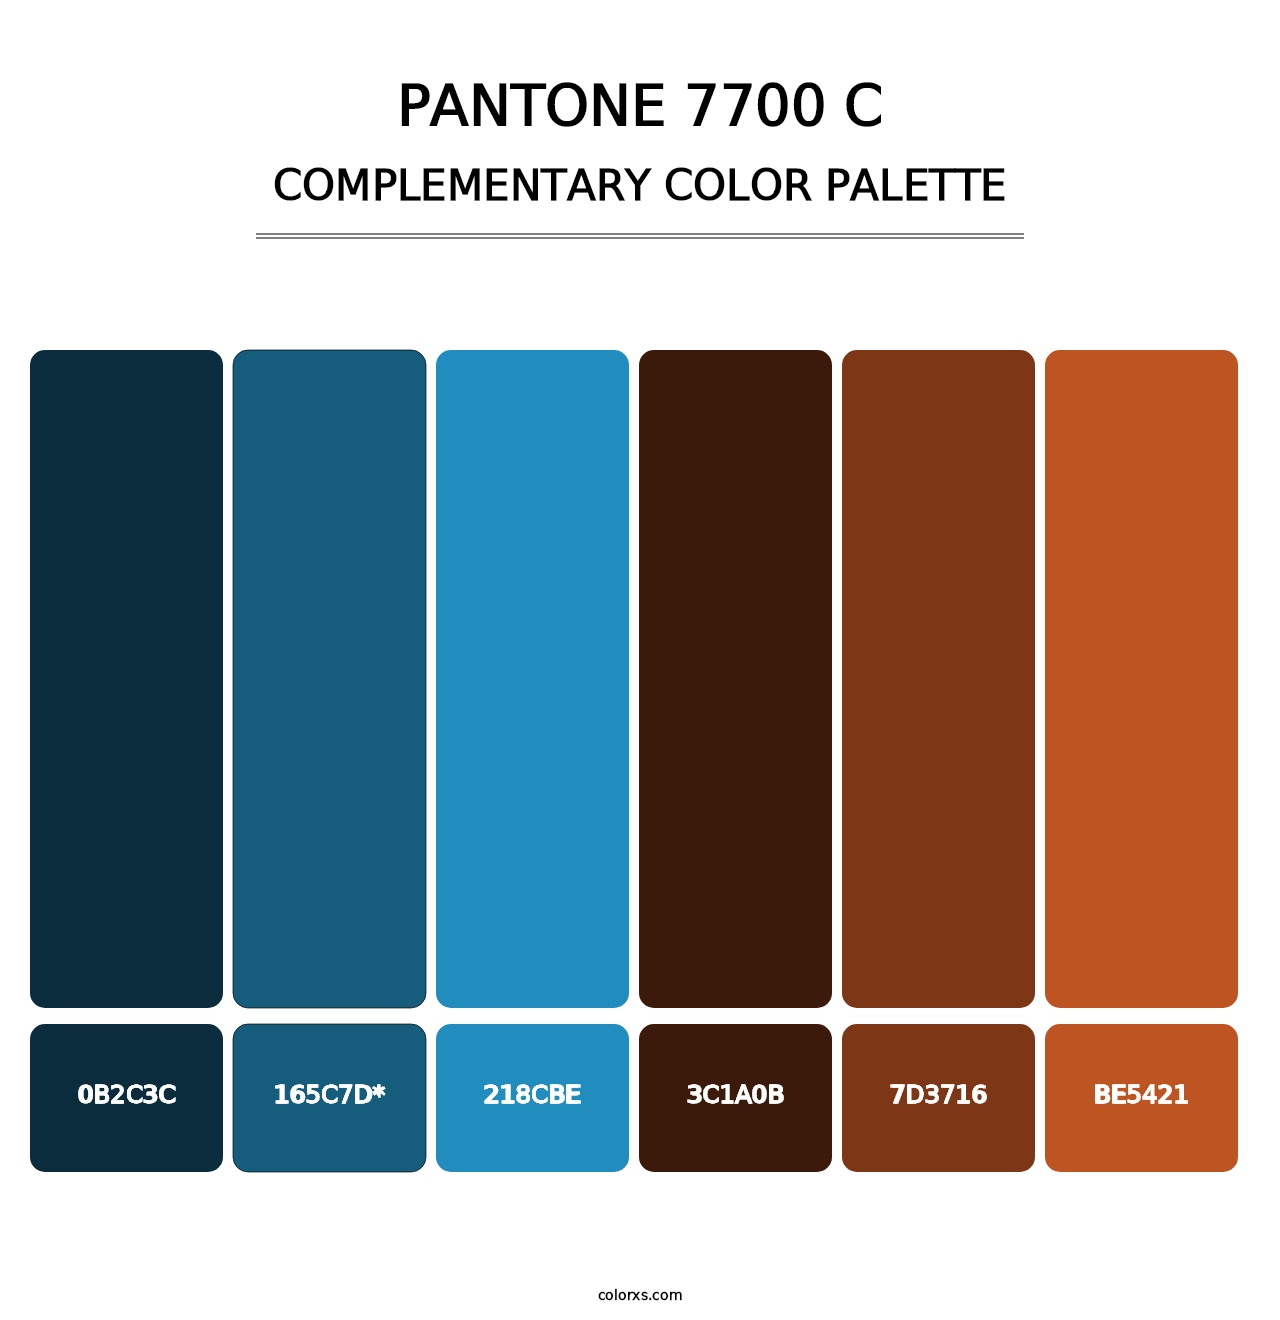 PANTONE 7700 C - Complementary Color Palette